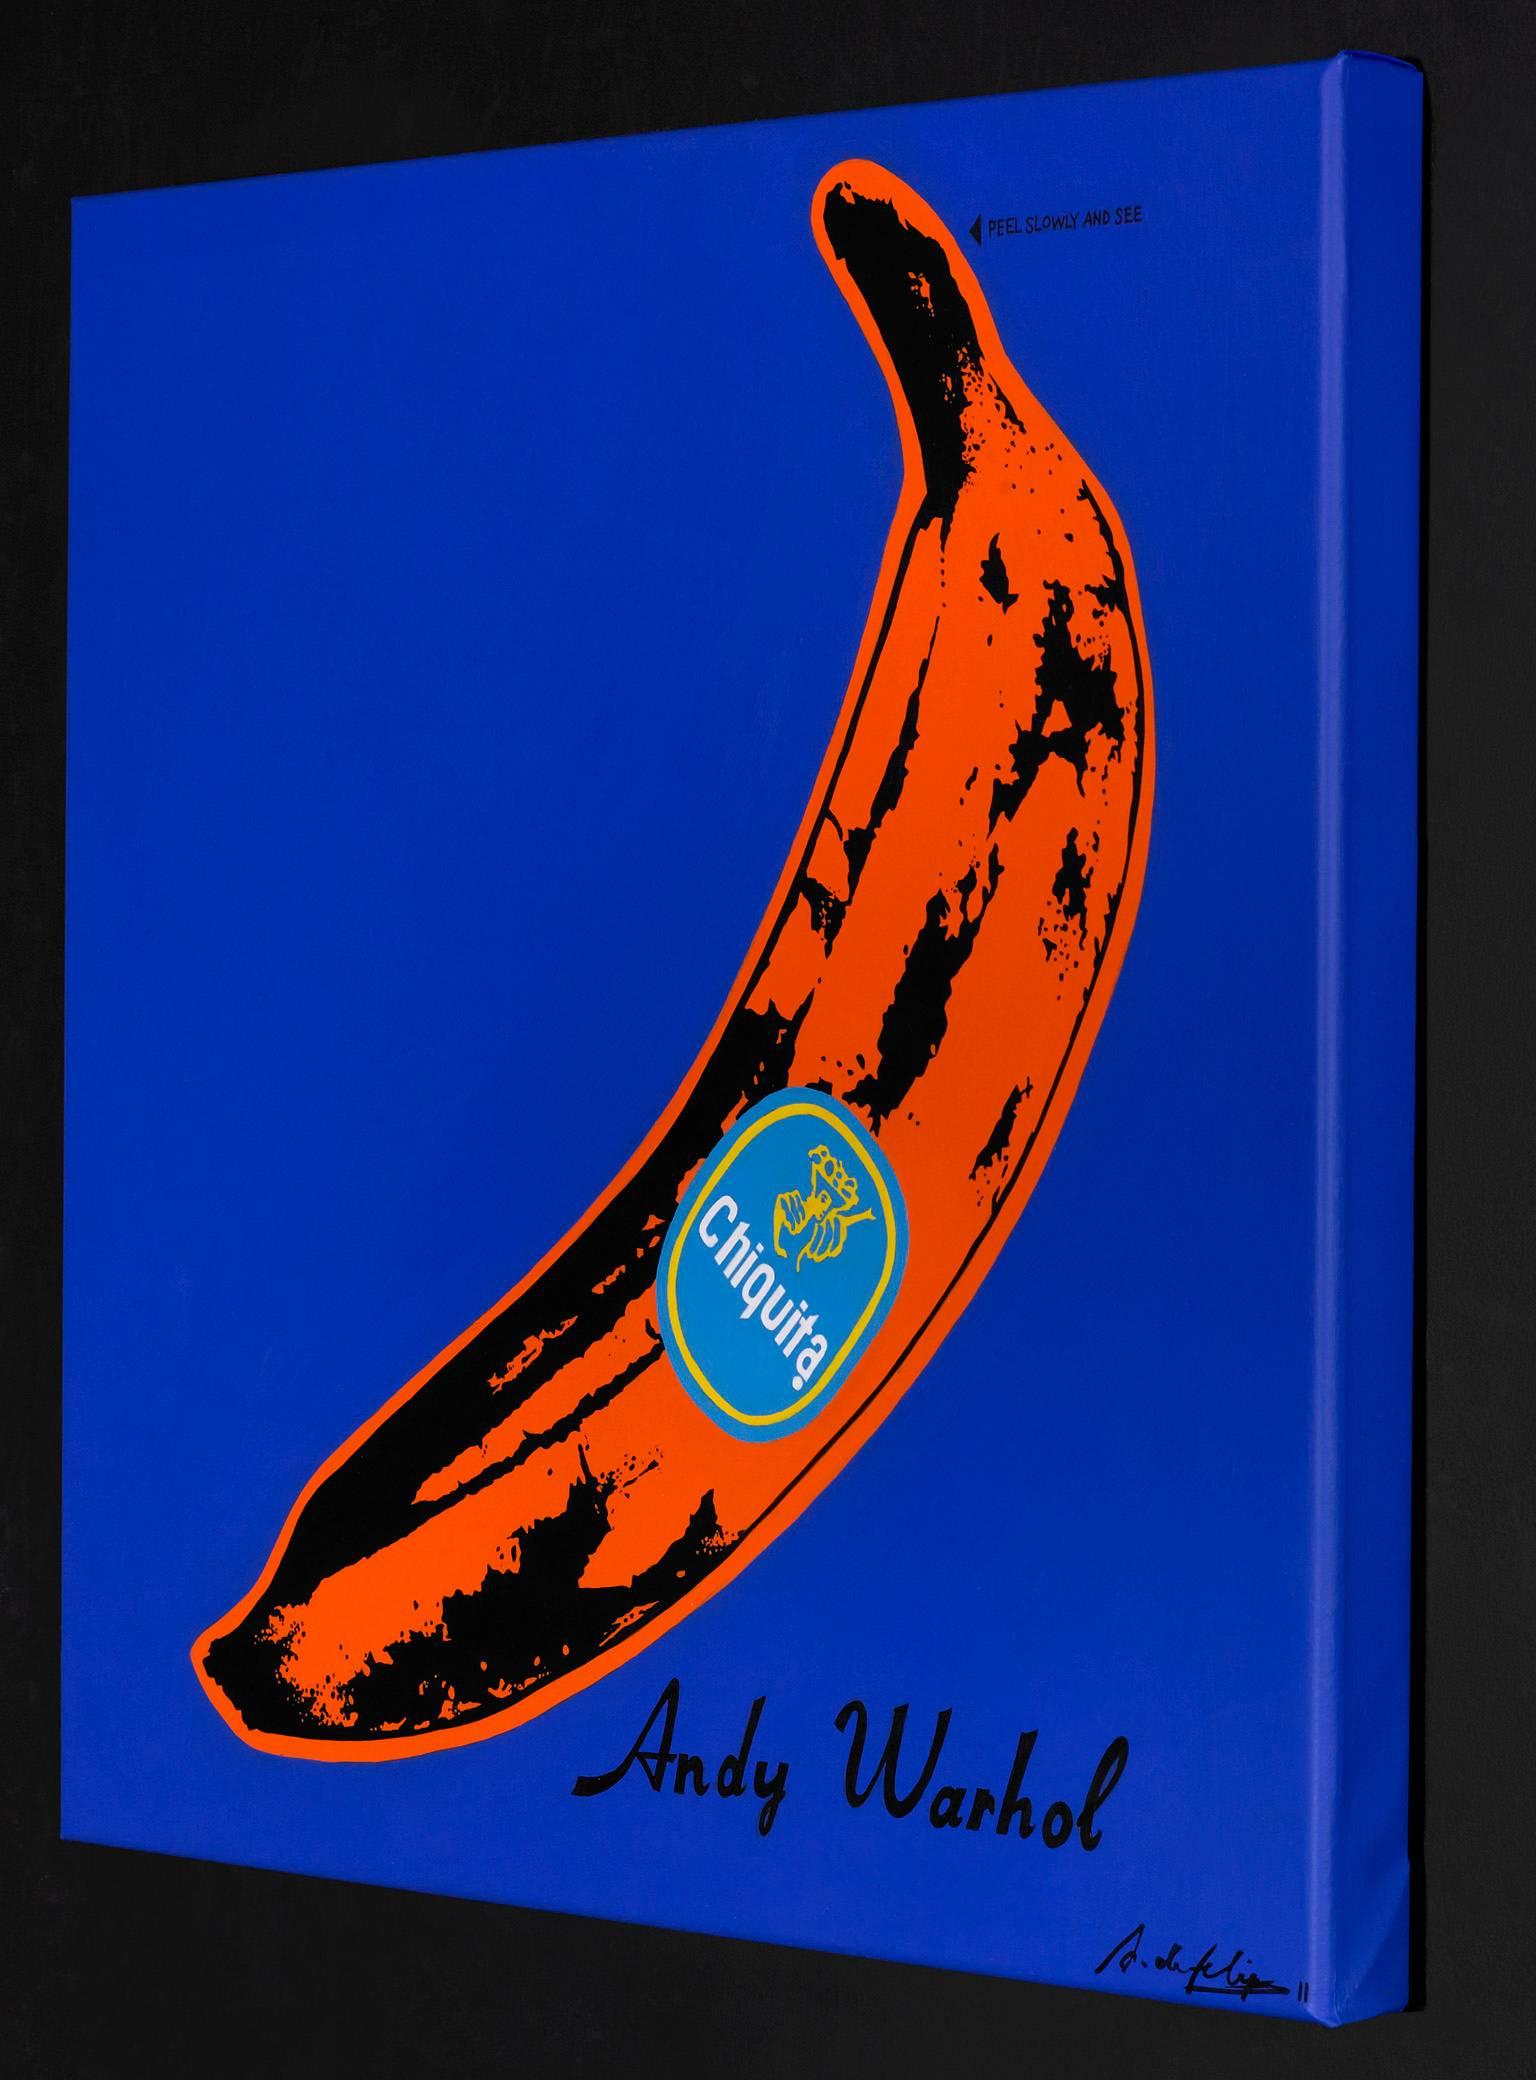 Banana Chiquita - Painting by Antonio de Felipe